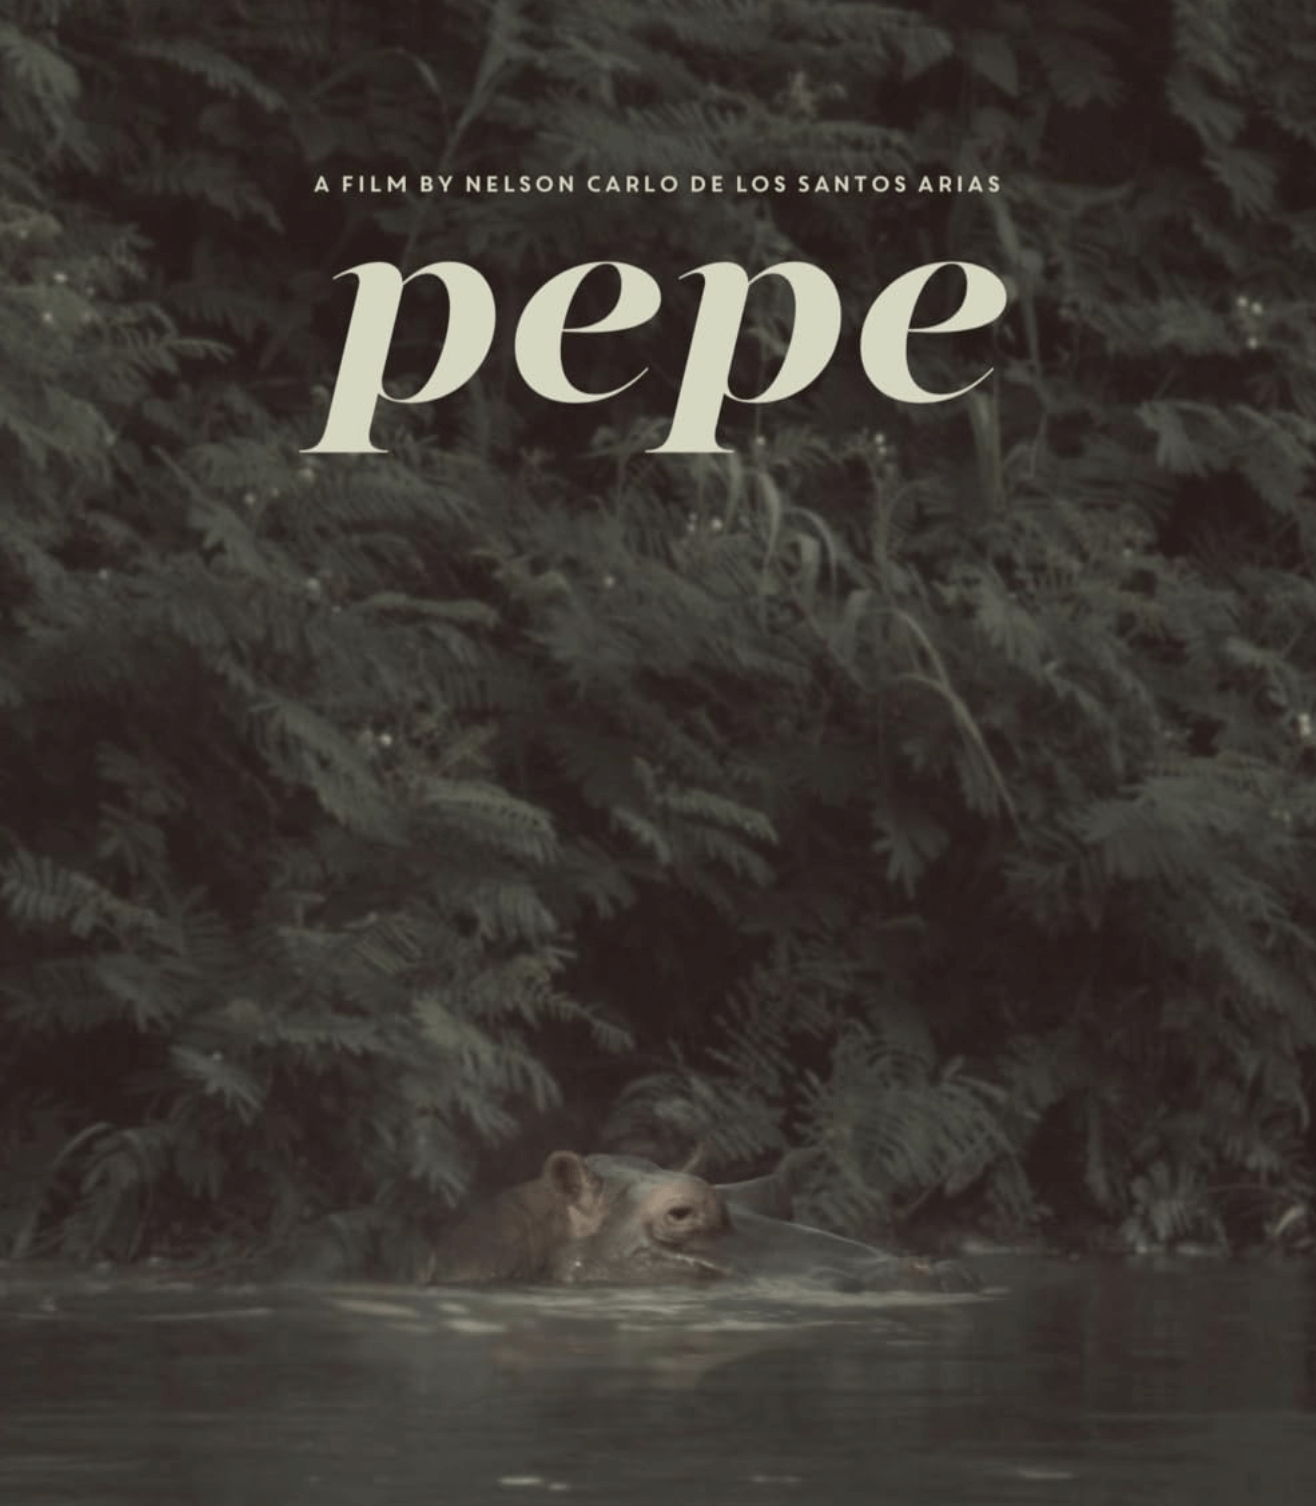 Nelson Carlos De Los Santos Arias’ work “Pepe” won him a Silver Bear for Best Director